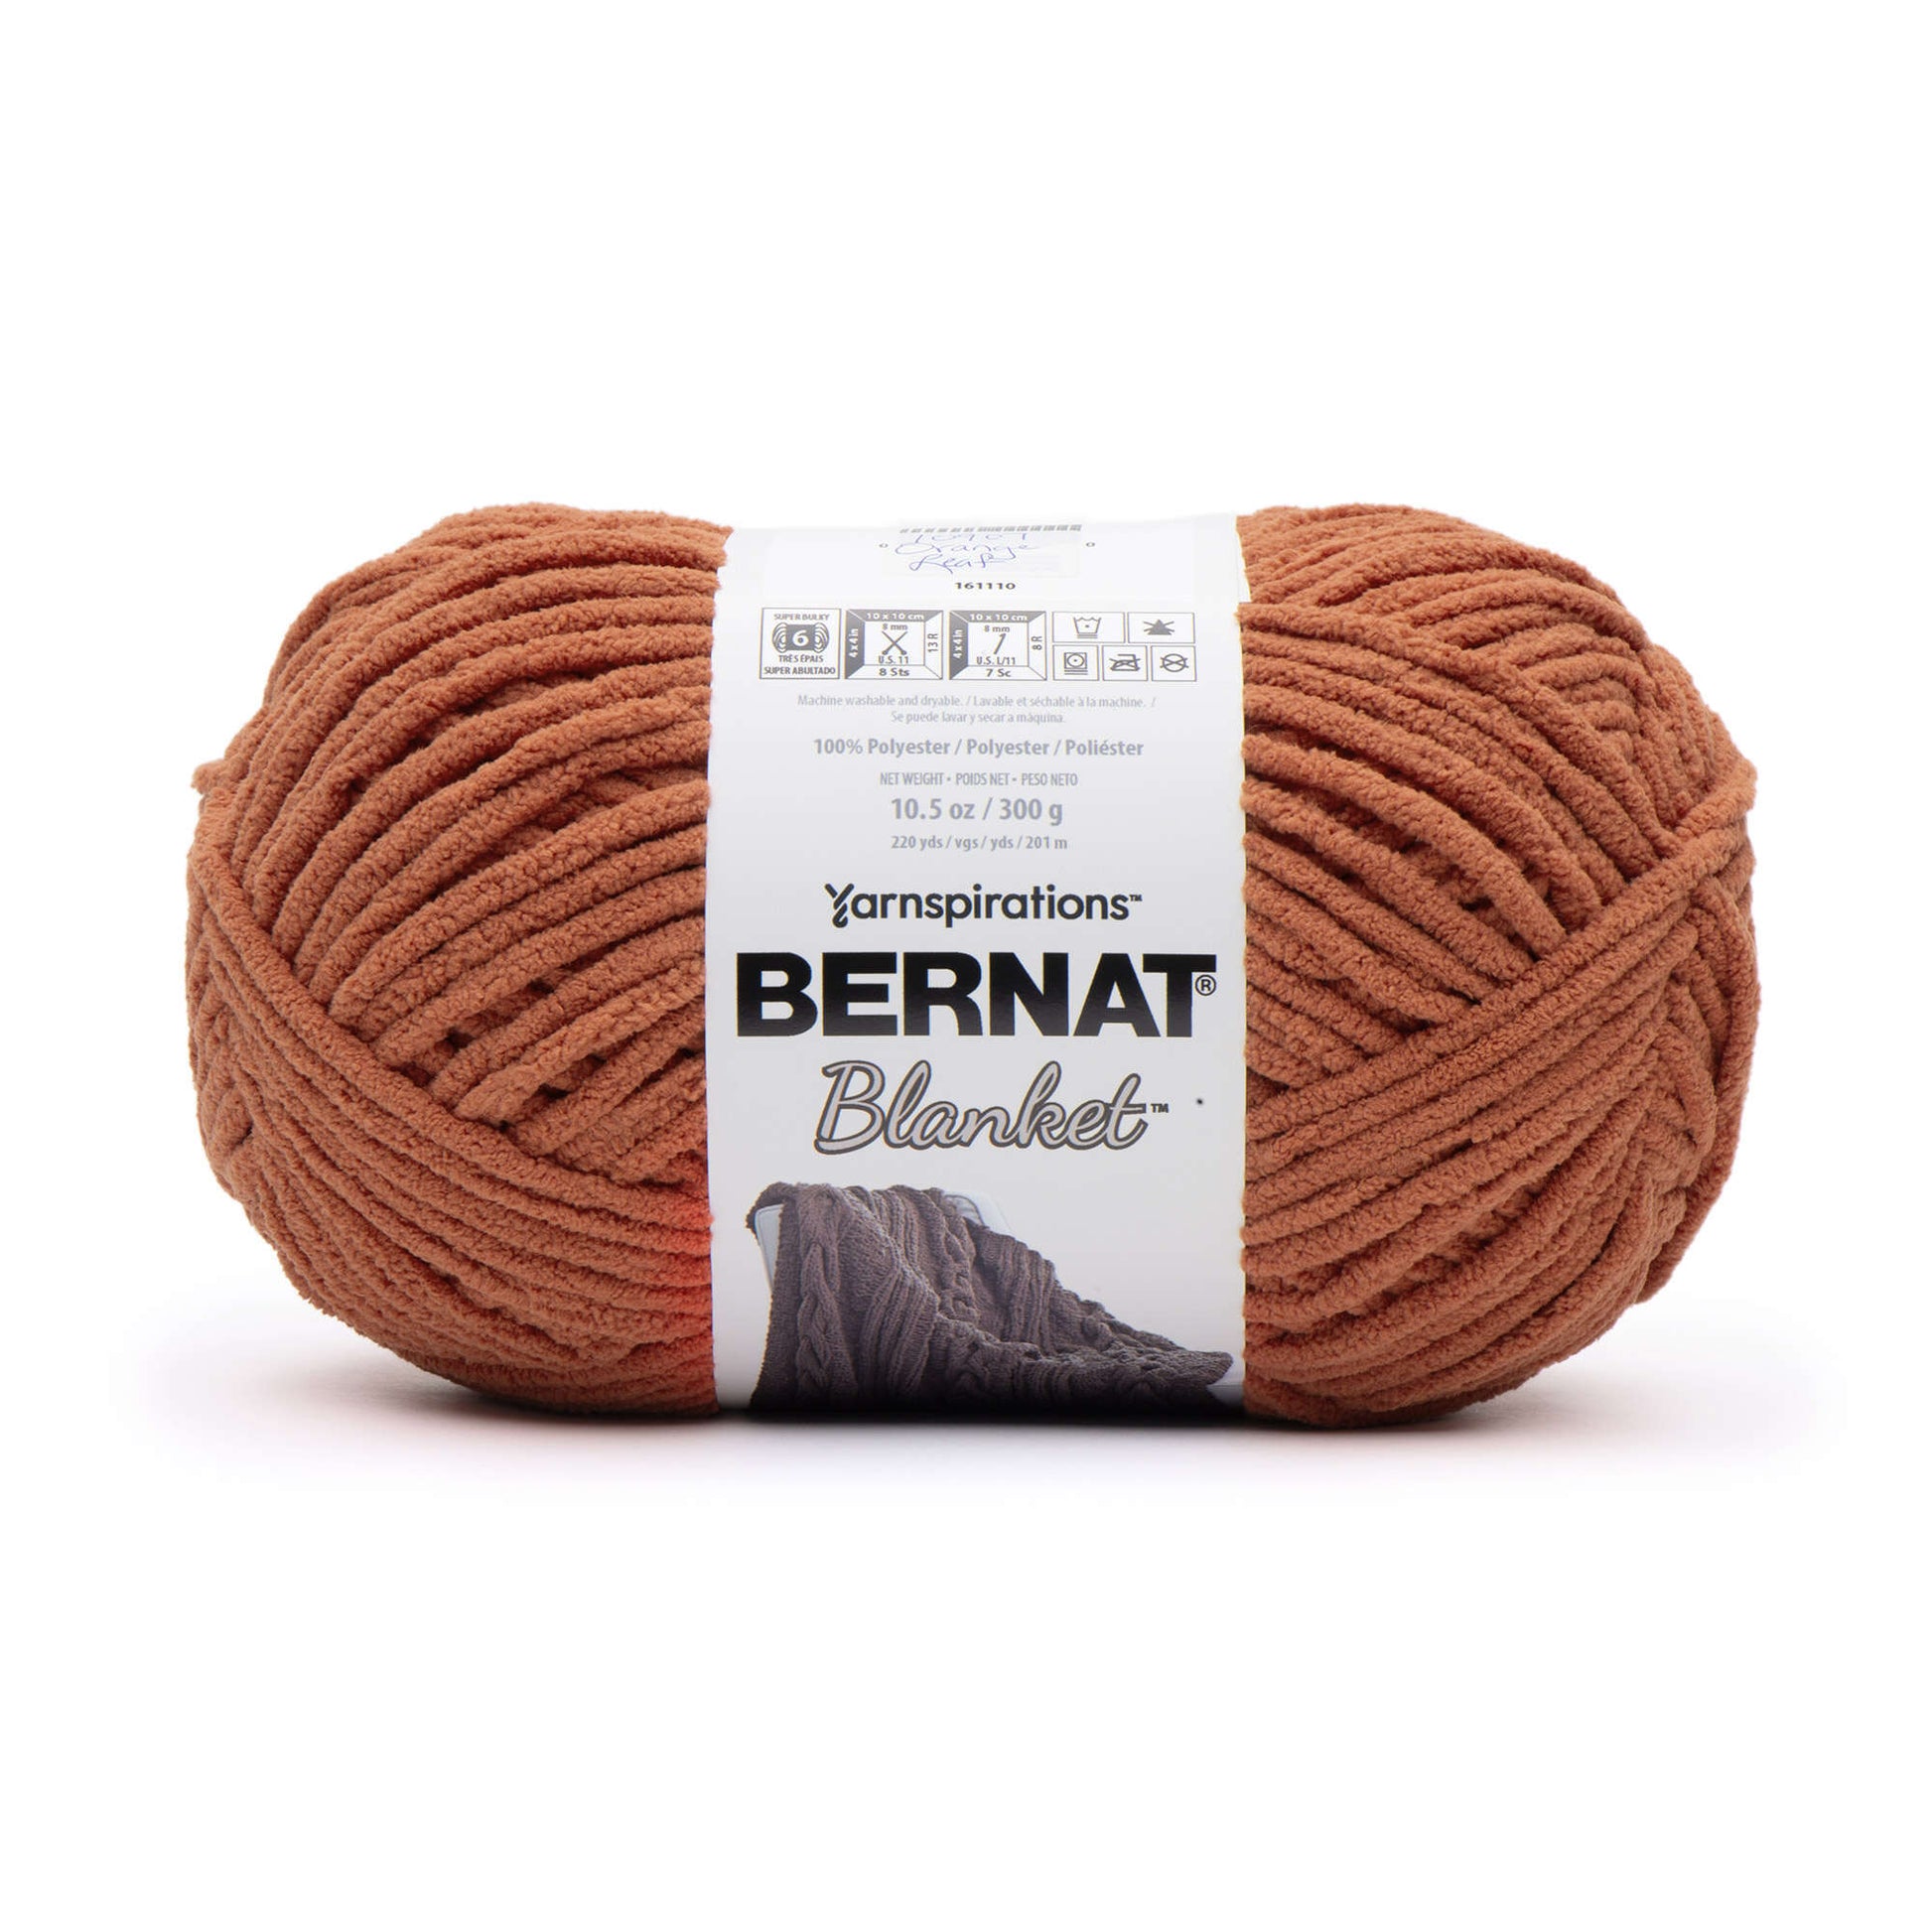 Bernat Blanket Yarn (300g/10.5oz) Orange Leaf